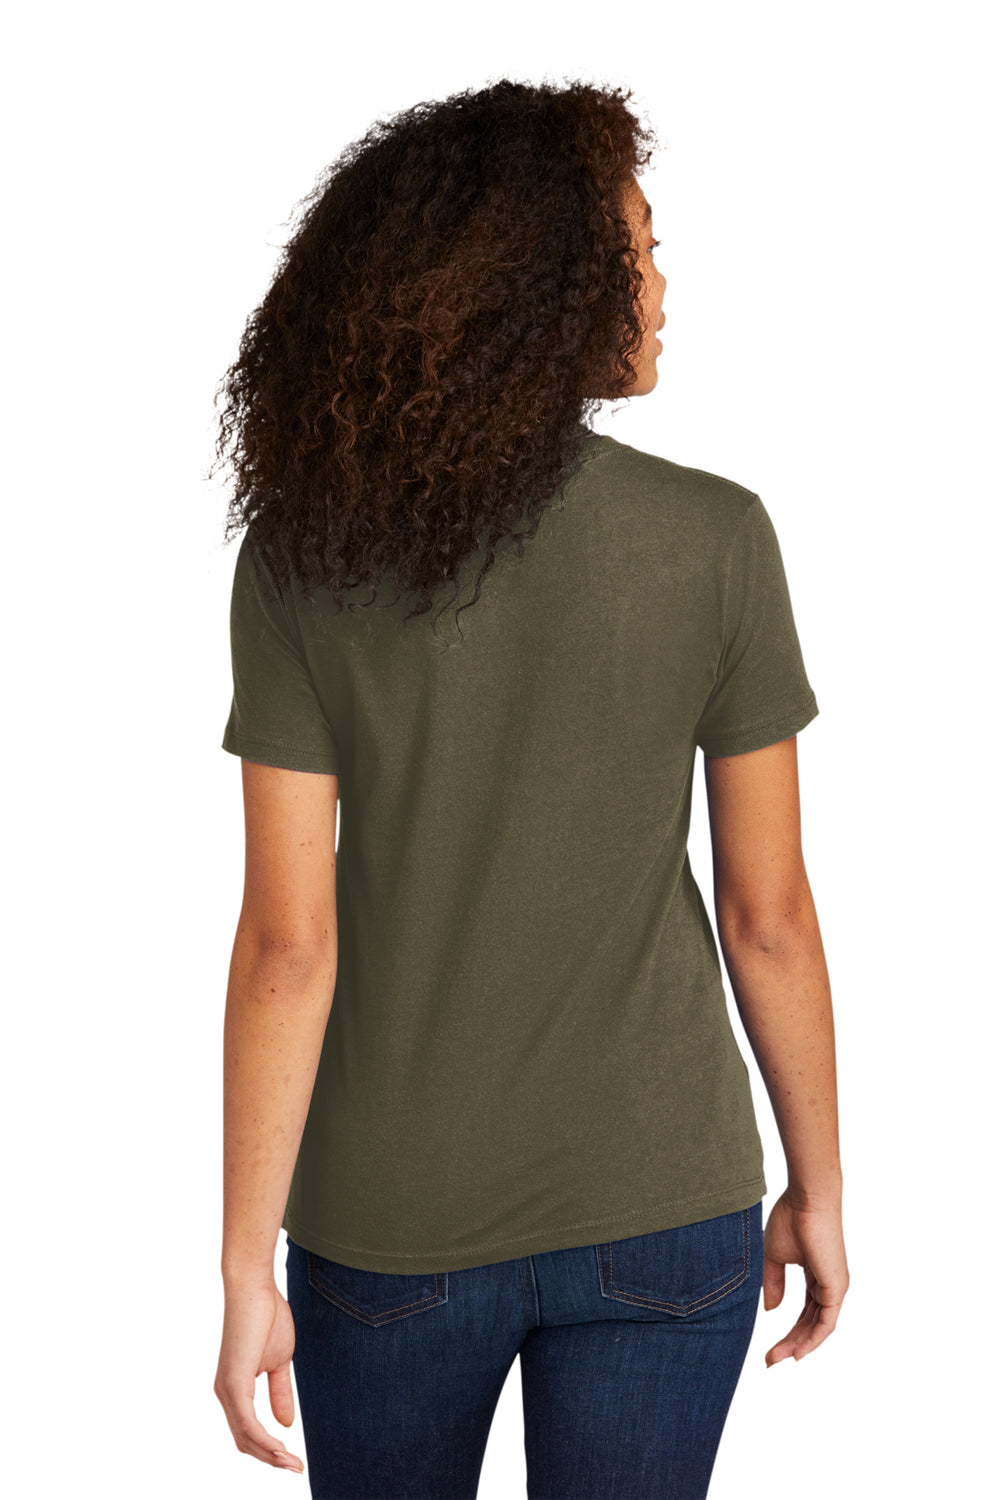 Next Level NL3900/N3900/3900 Womens Boyfriend Fine Jersey Short Sleeve Crewneck T-Shirt Military Green Back